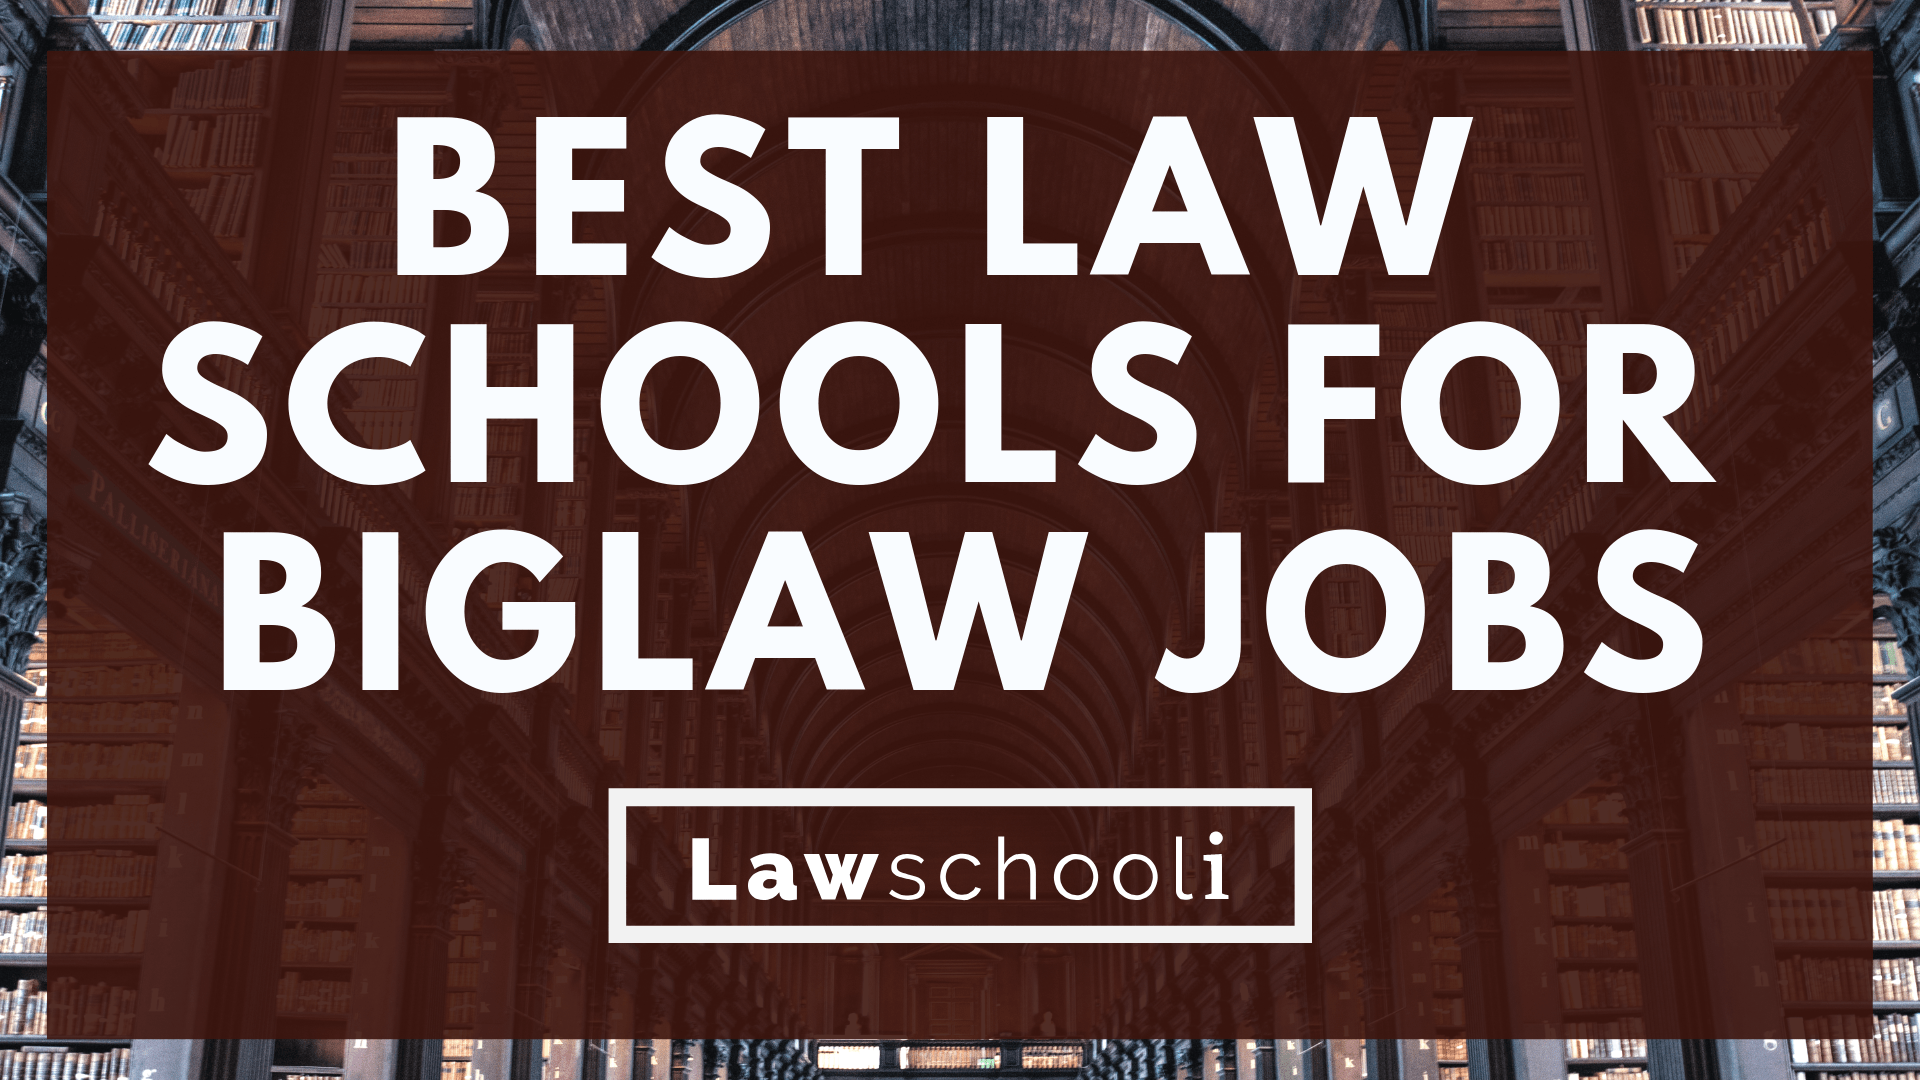 The Best Law Schools for BigLaw Jobs - $190,000 a year - LawSchooli